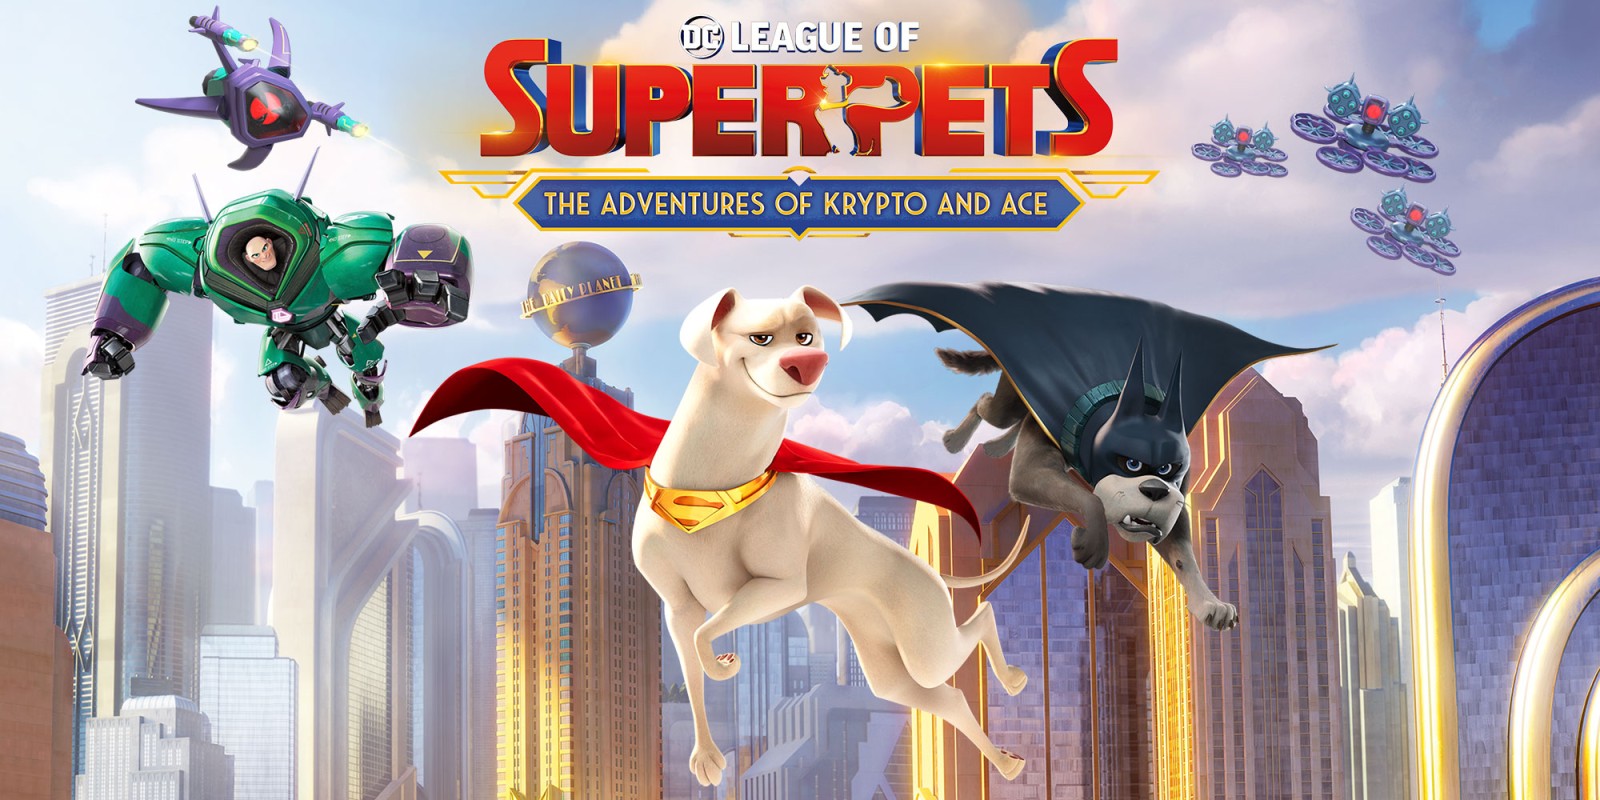 „DCs Super Pet Movie Tie-in angekündigt“